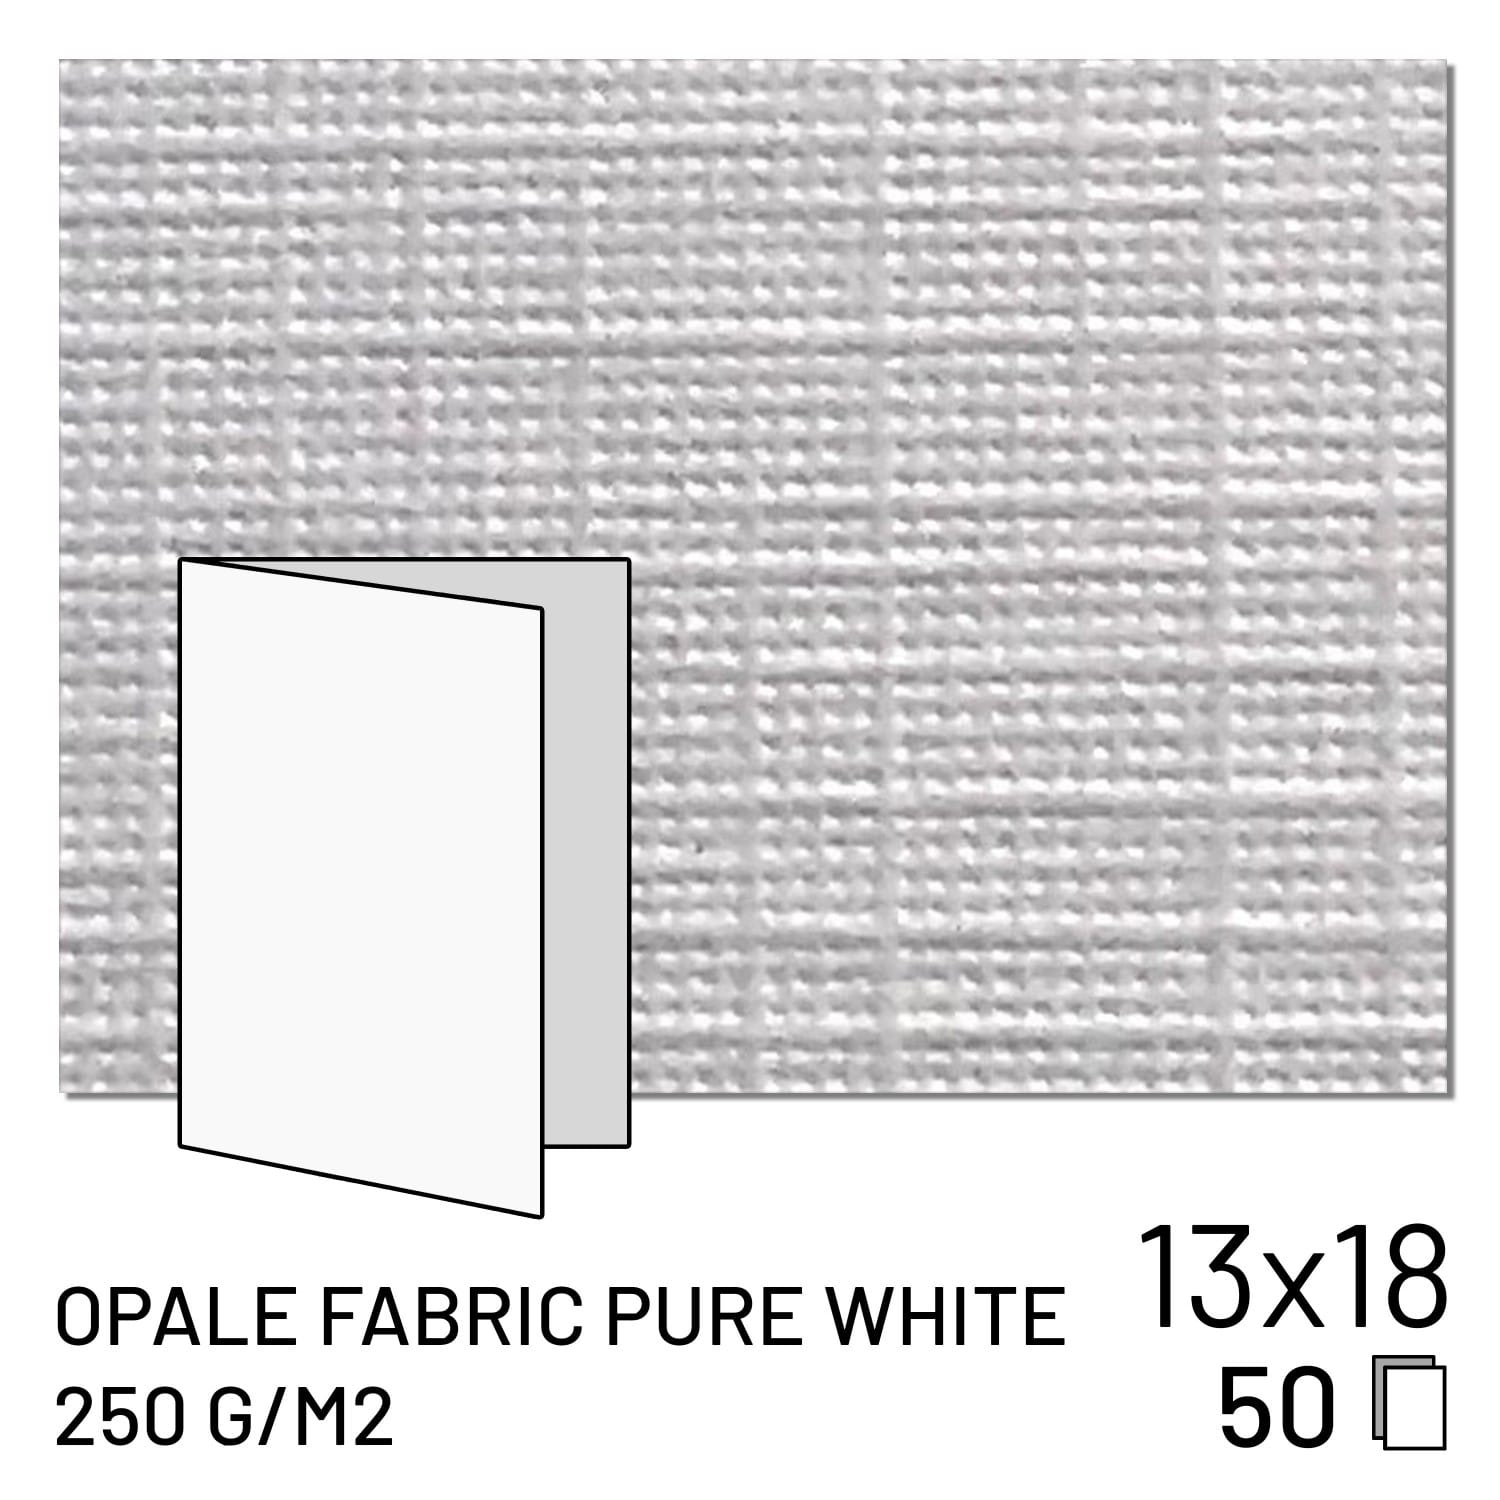 Papier FUJI Opale Fabric Pure White 250g 13x18 / 2 volets (50 feuilles)  (70100148092)